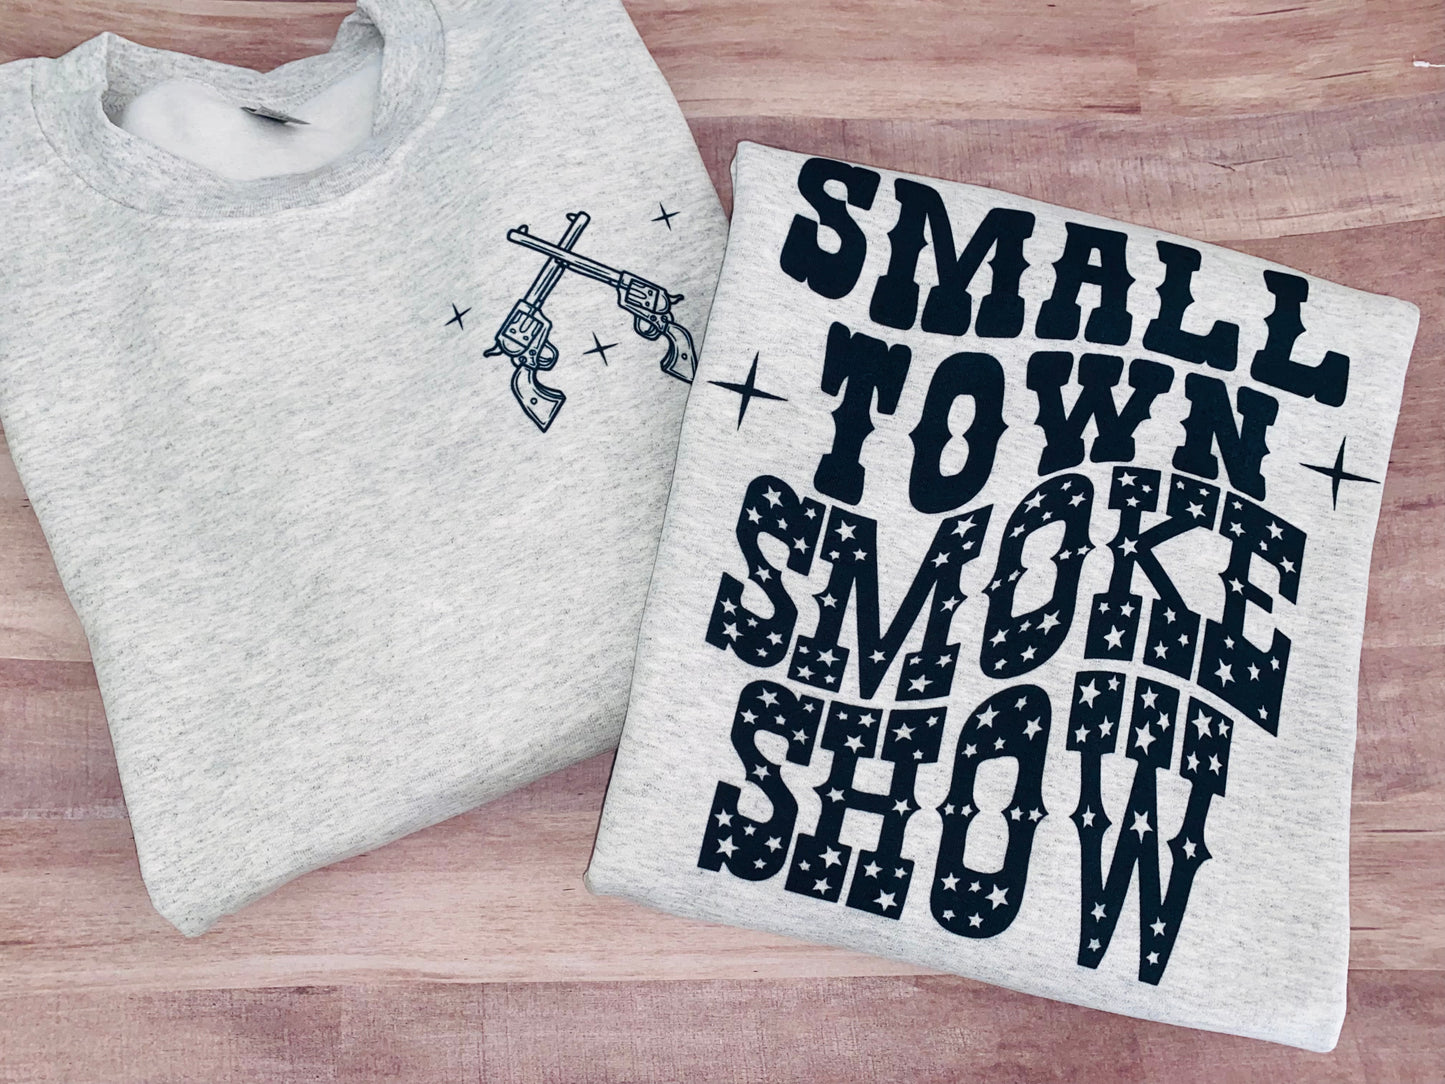 Small town smokeshow sweatshirt TAT 3 WEEKS